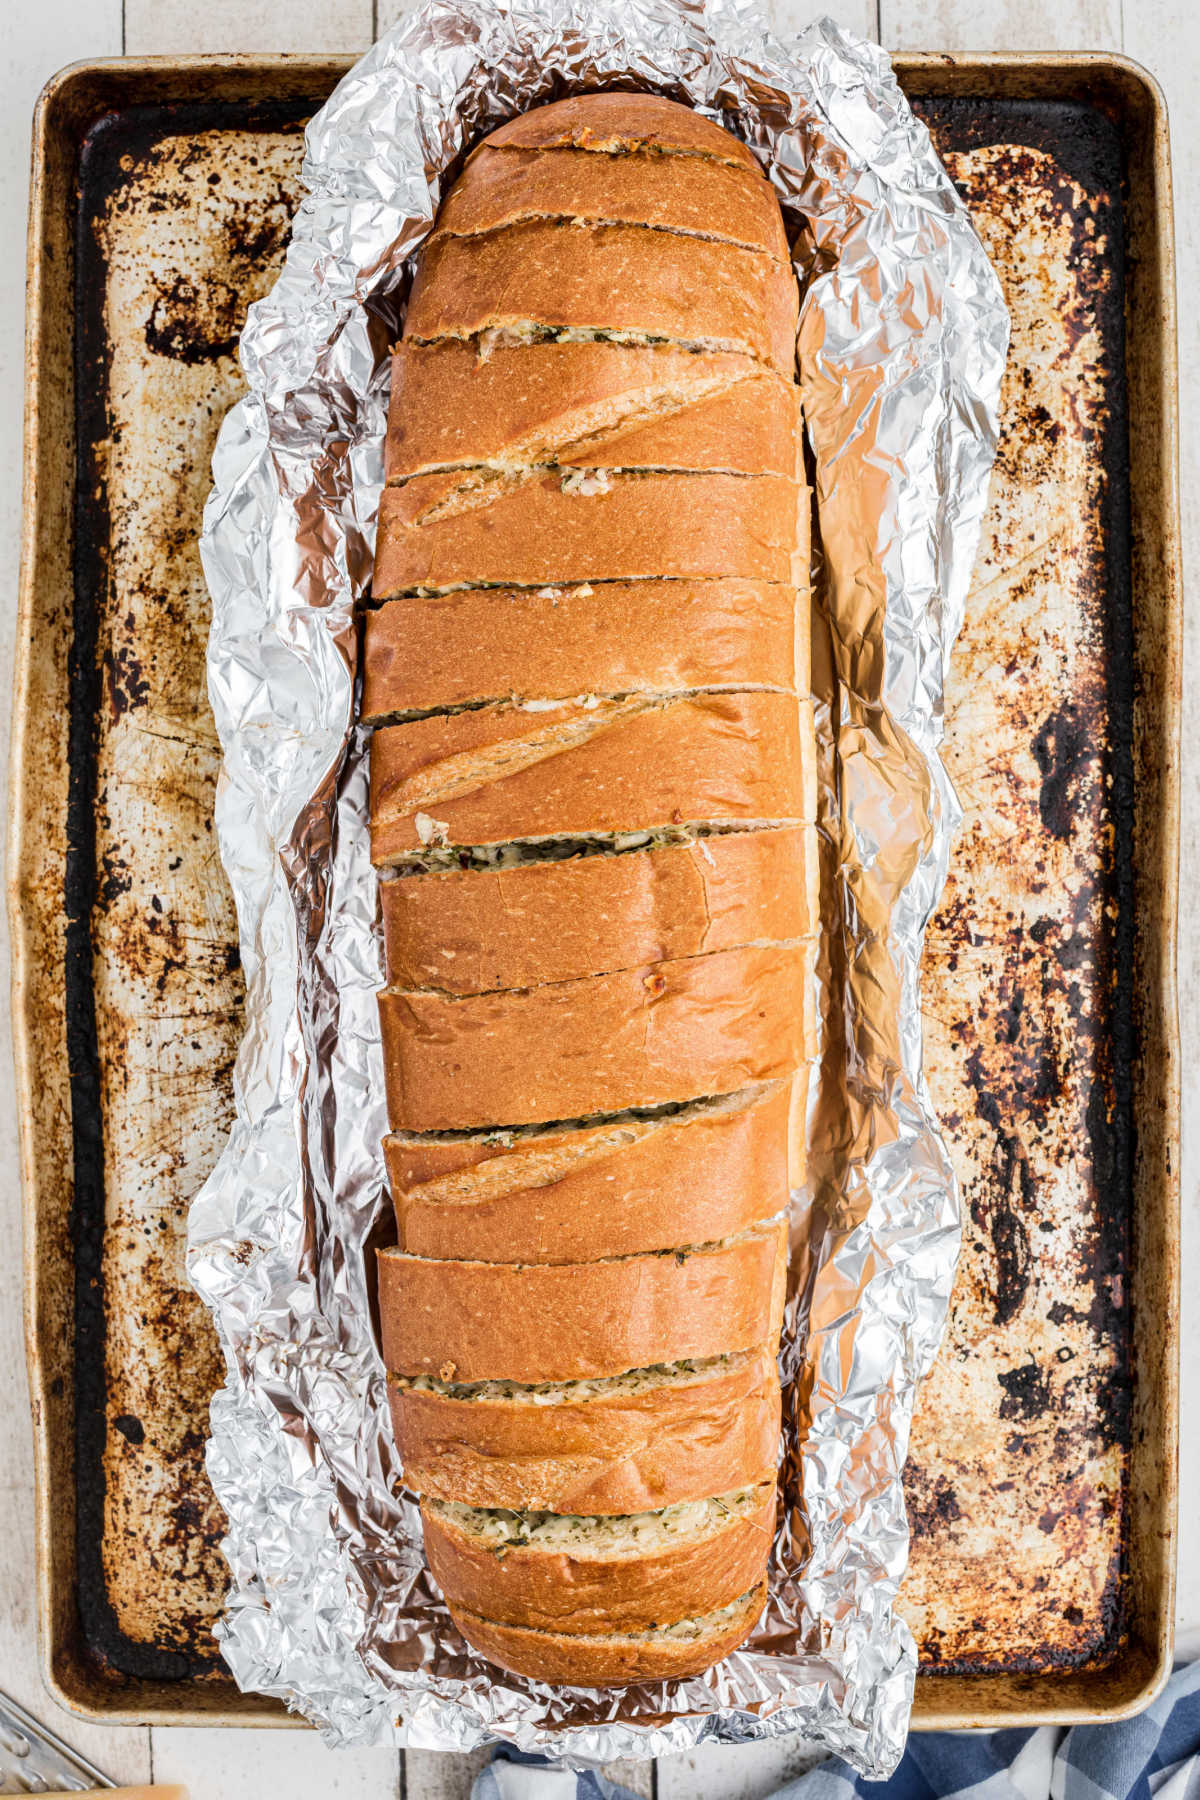 A baking sheet with a loaf of stuffed garlic bread still in foil.